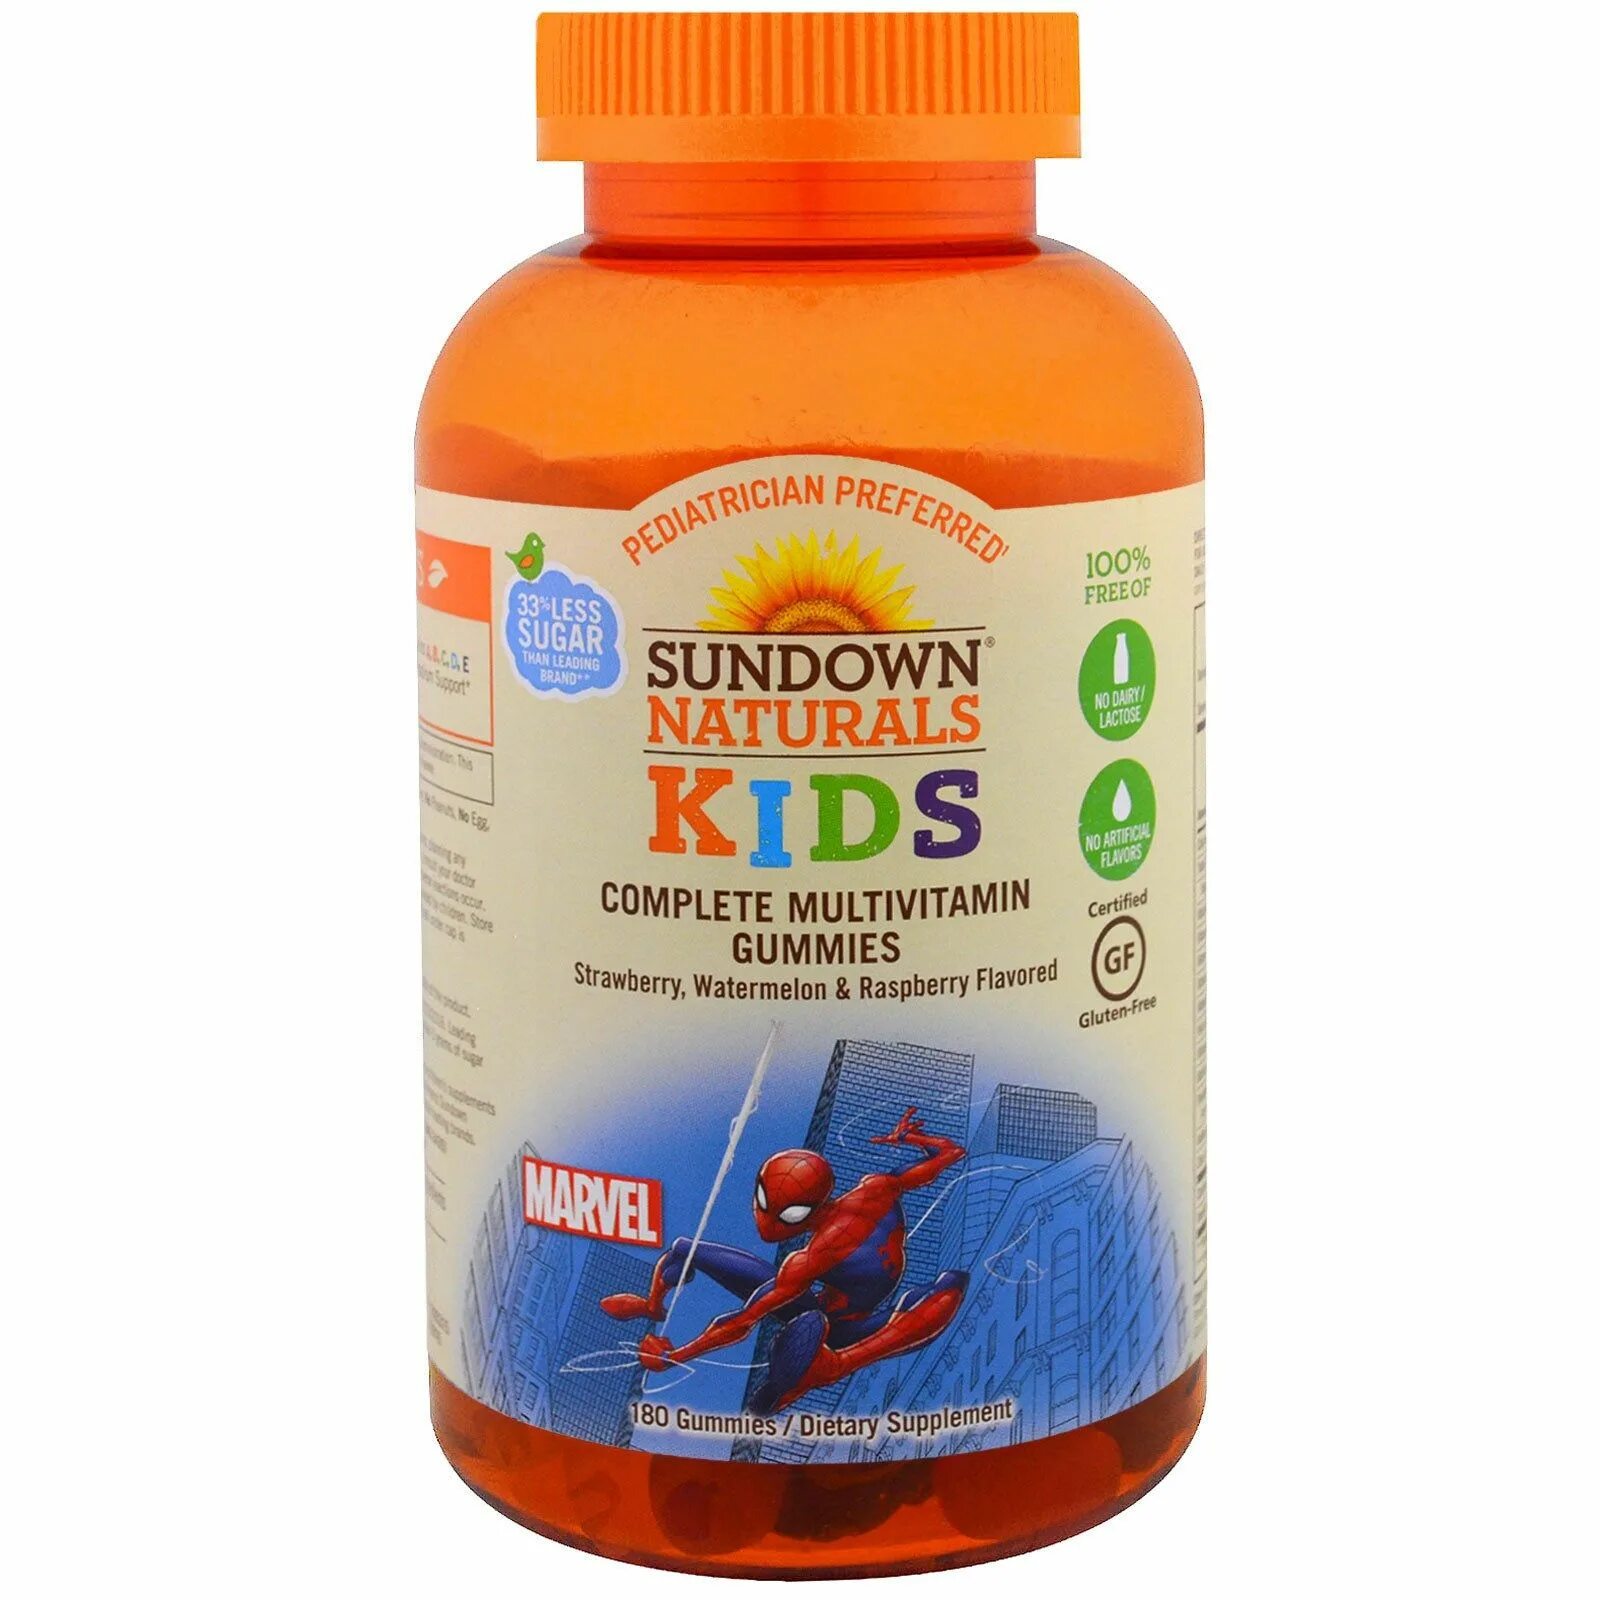 Sundown Kids витамины. Sundown naturals Kids витамины Marvel. Мультивитамины для детей. Витамины мультивитамины для детей.